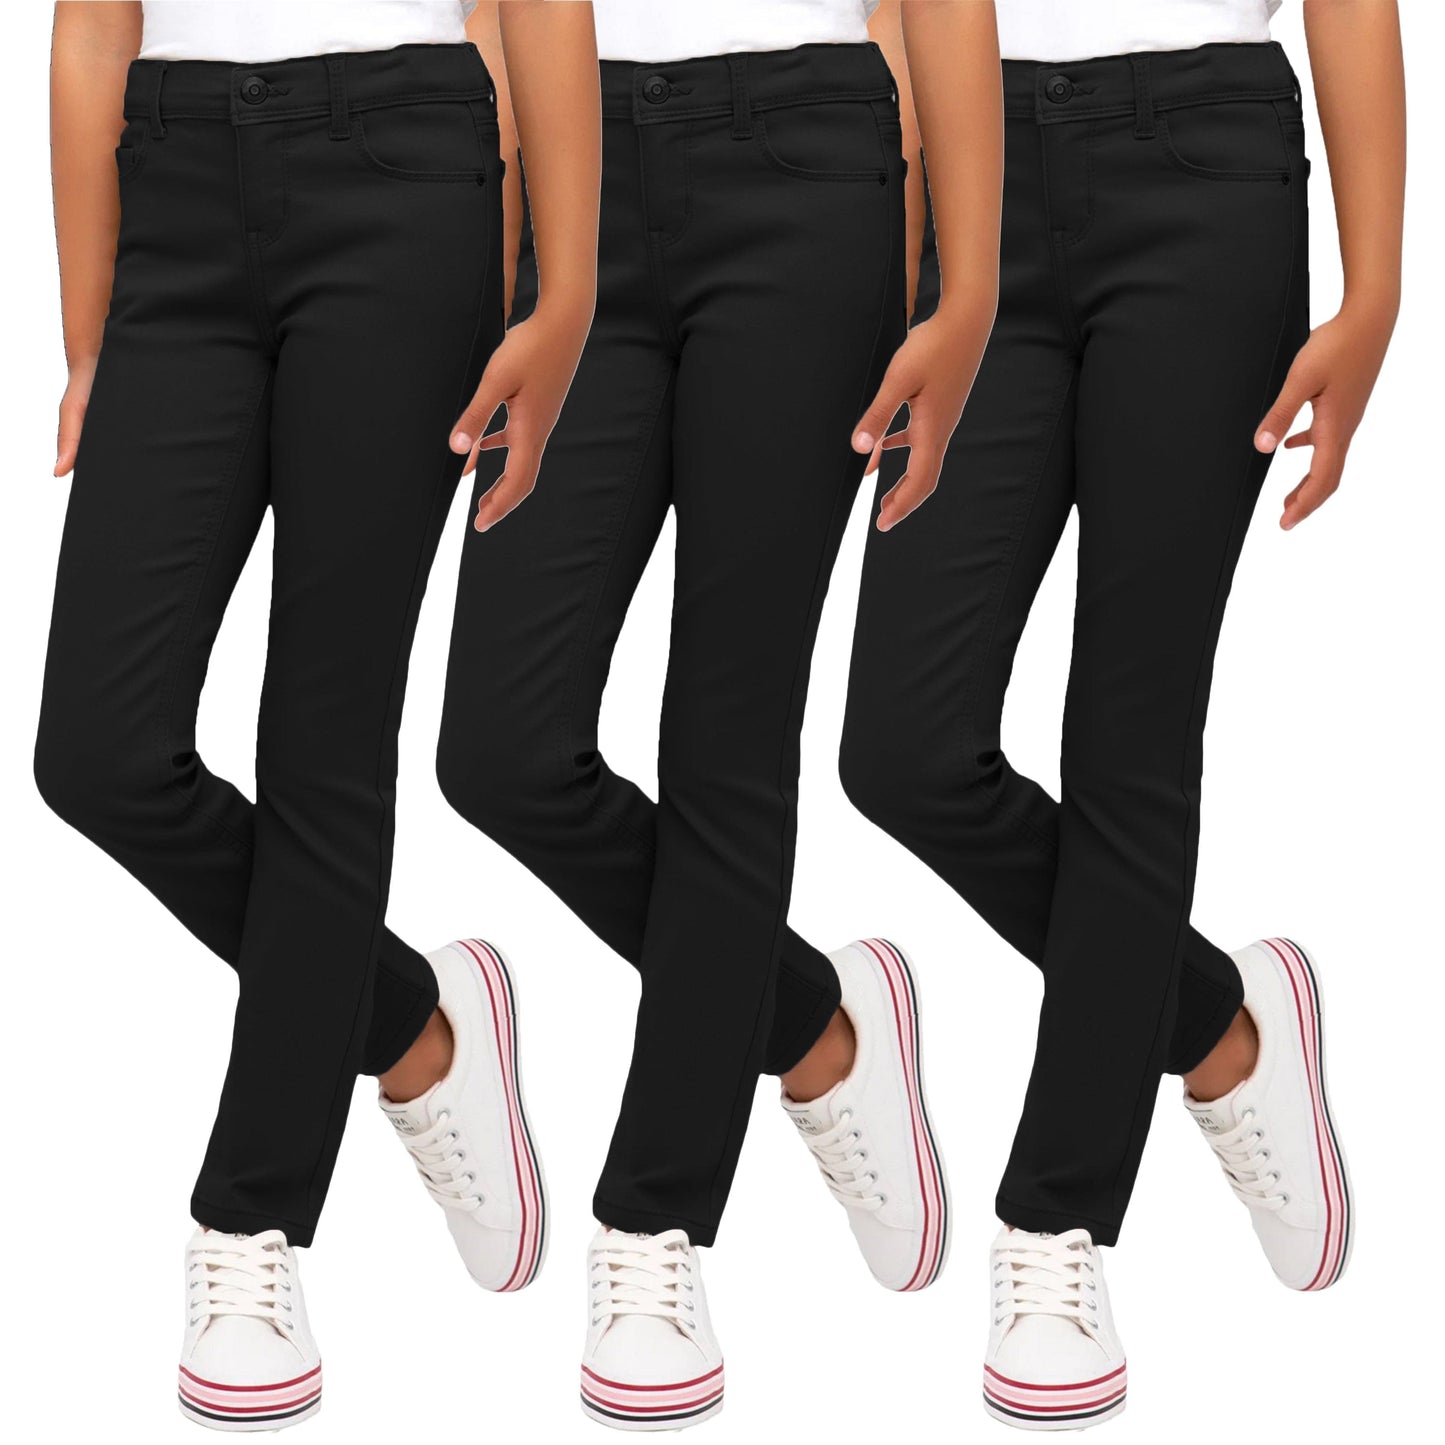 Wholesale Girl's School Uniform Stretch Pencil Skinny Pants in